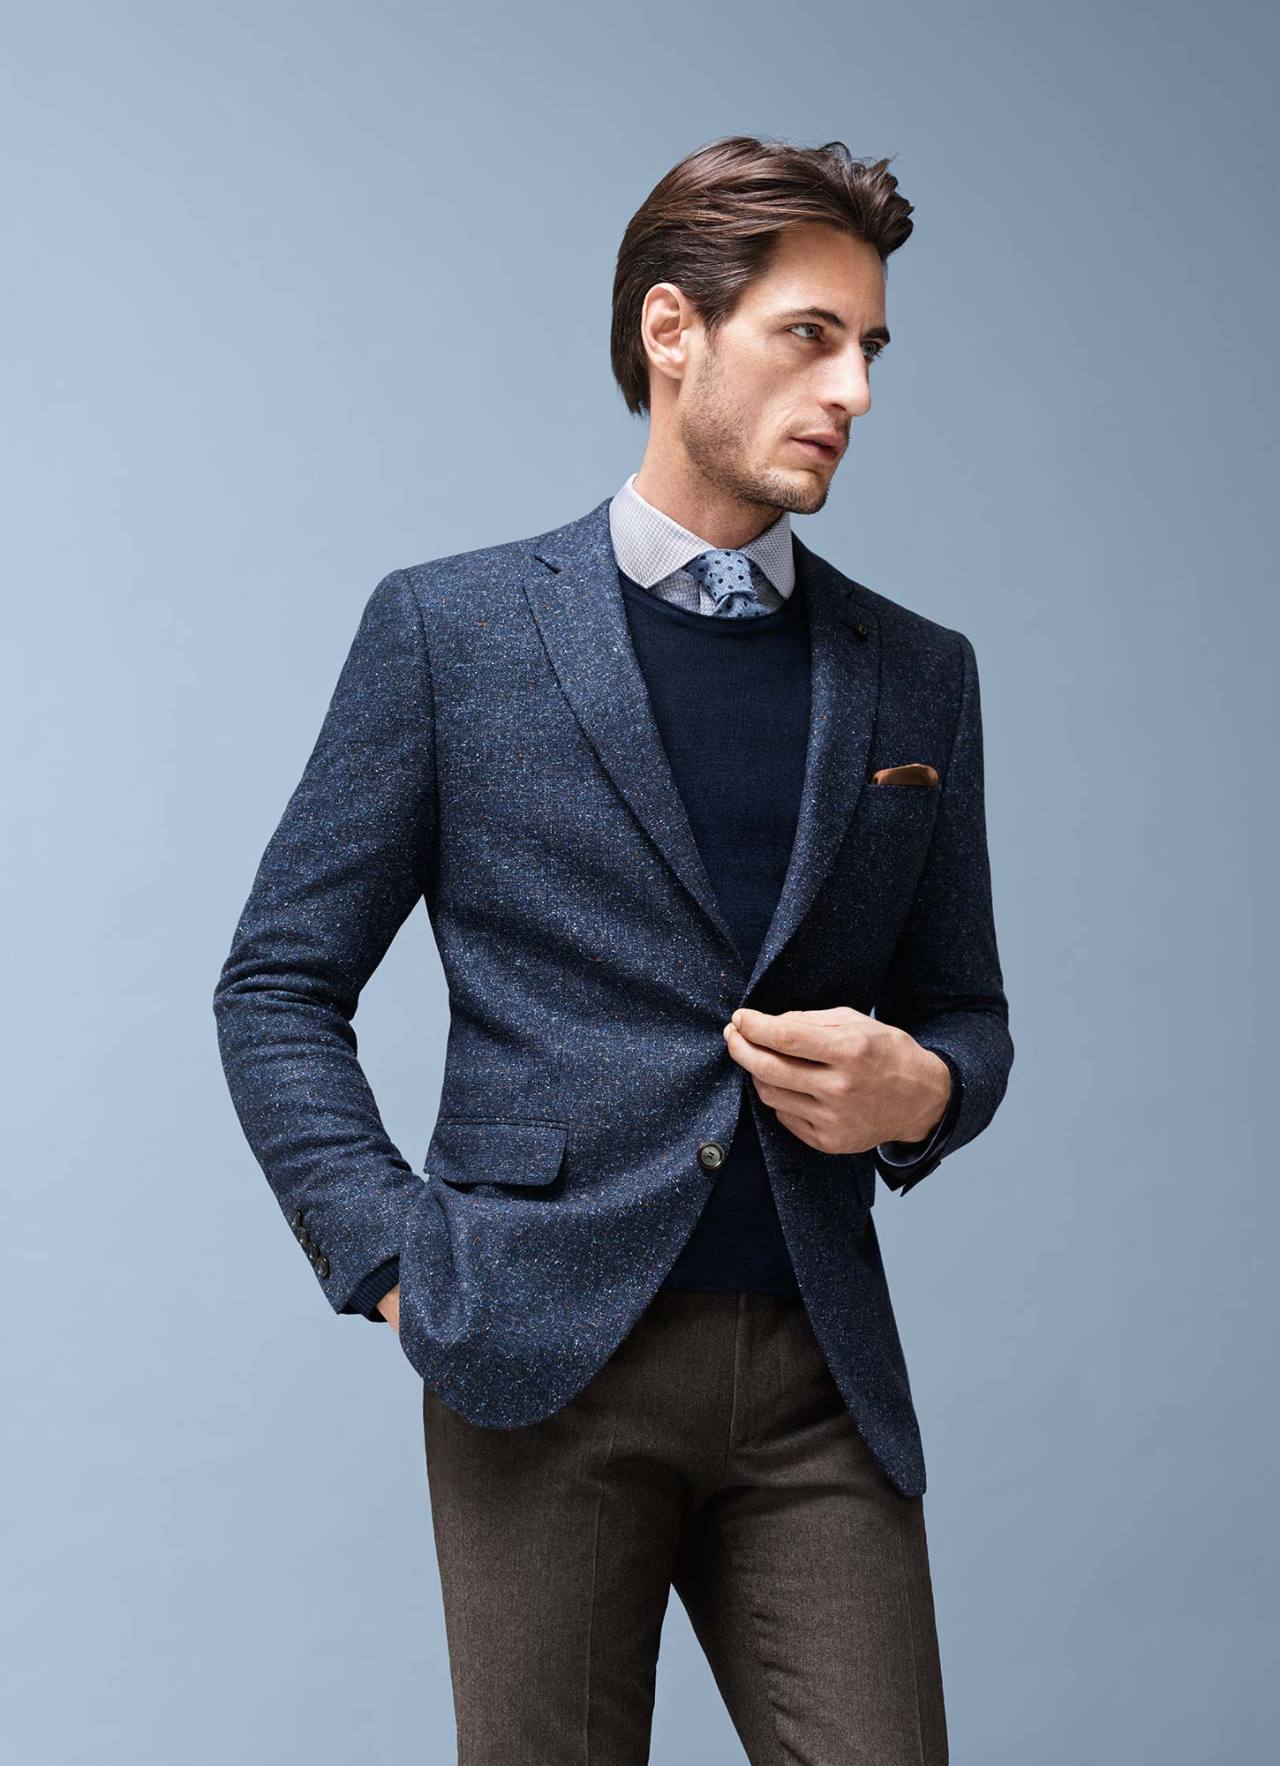 Parfait Gentleman | Men's Fashion Blog - DIGEL Fall/Winter 2015